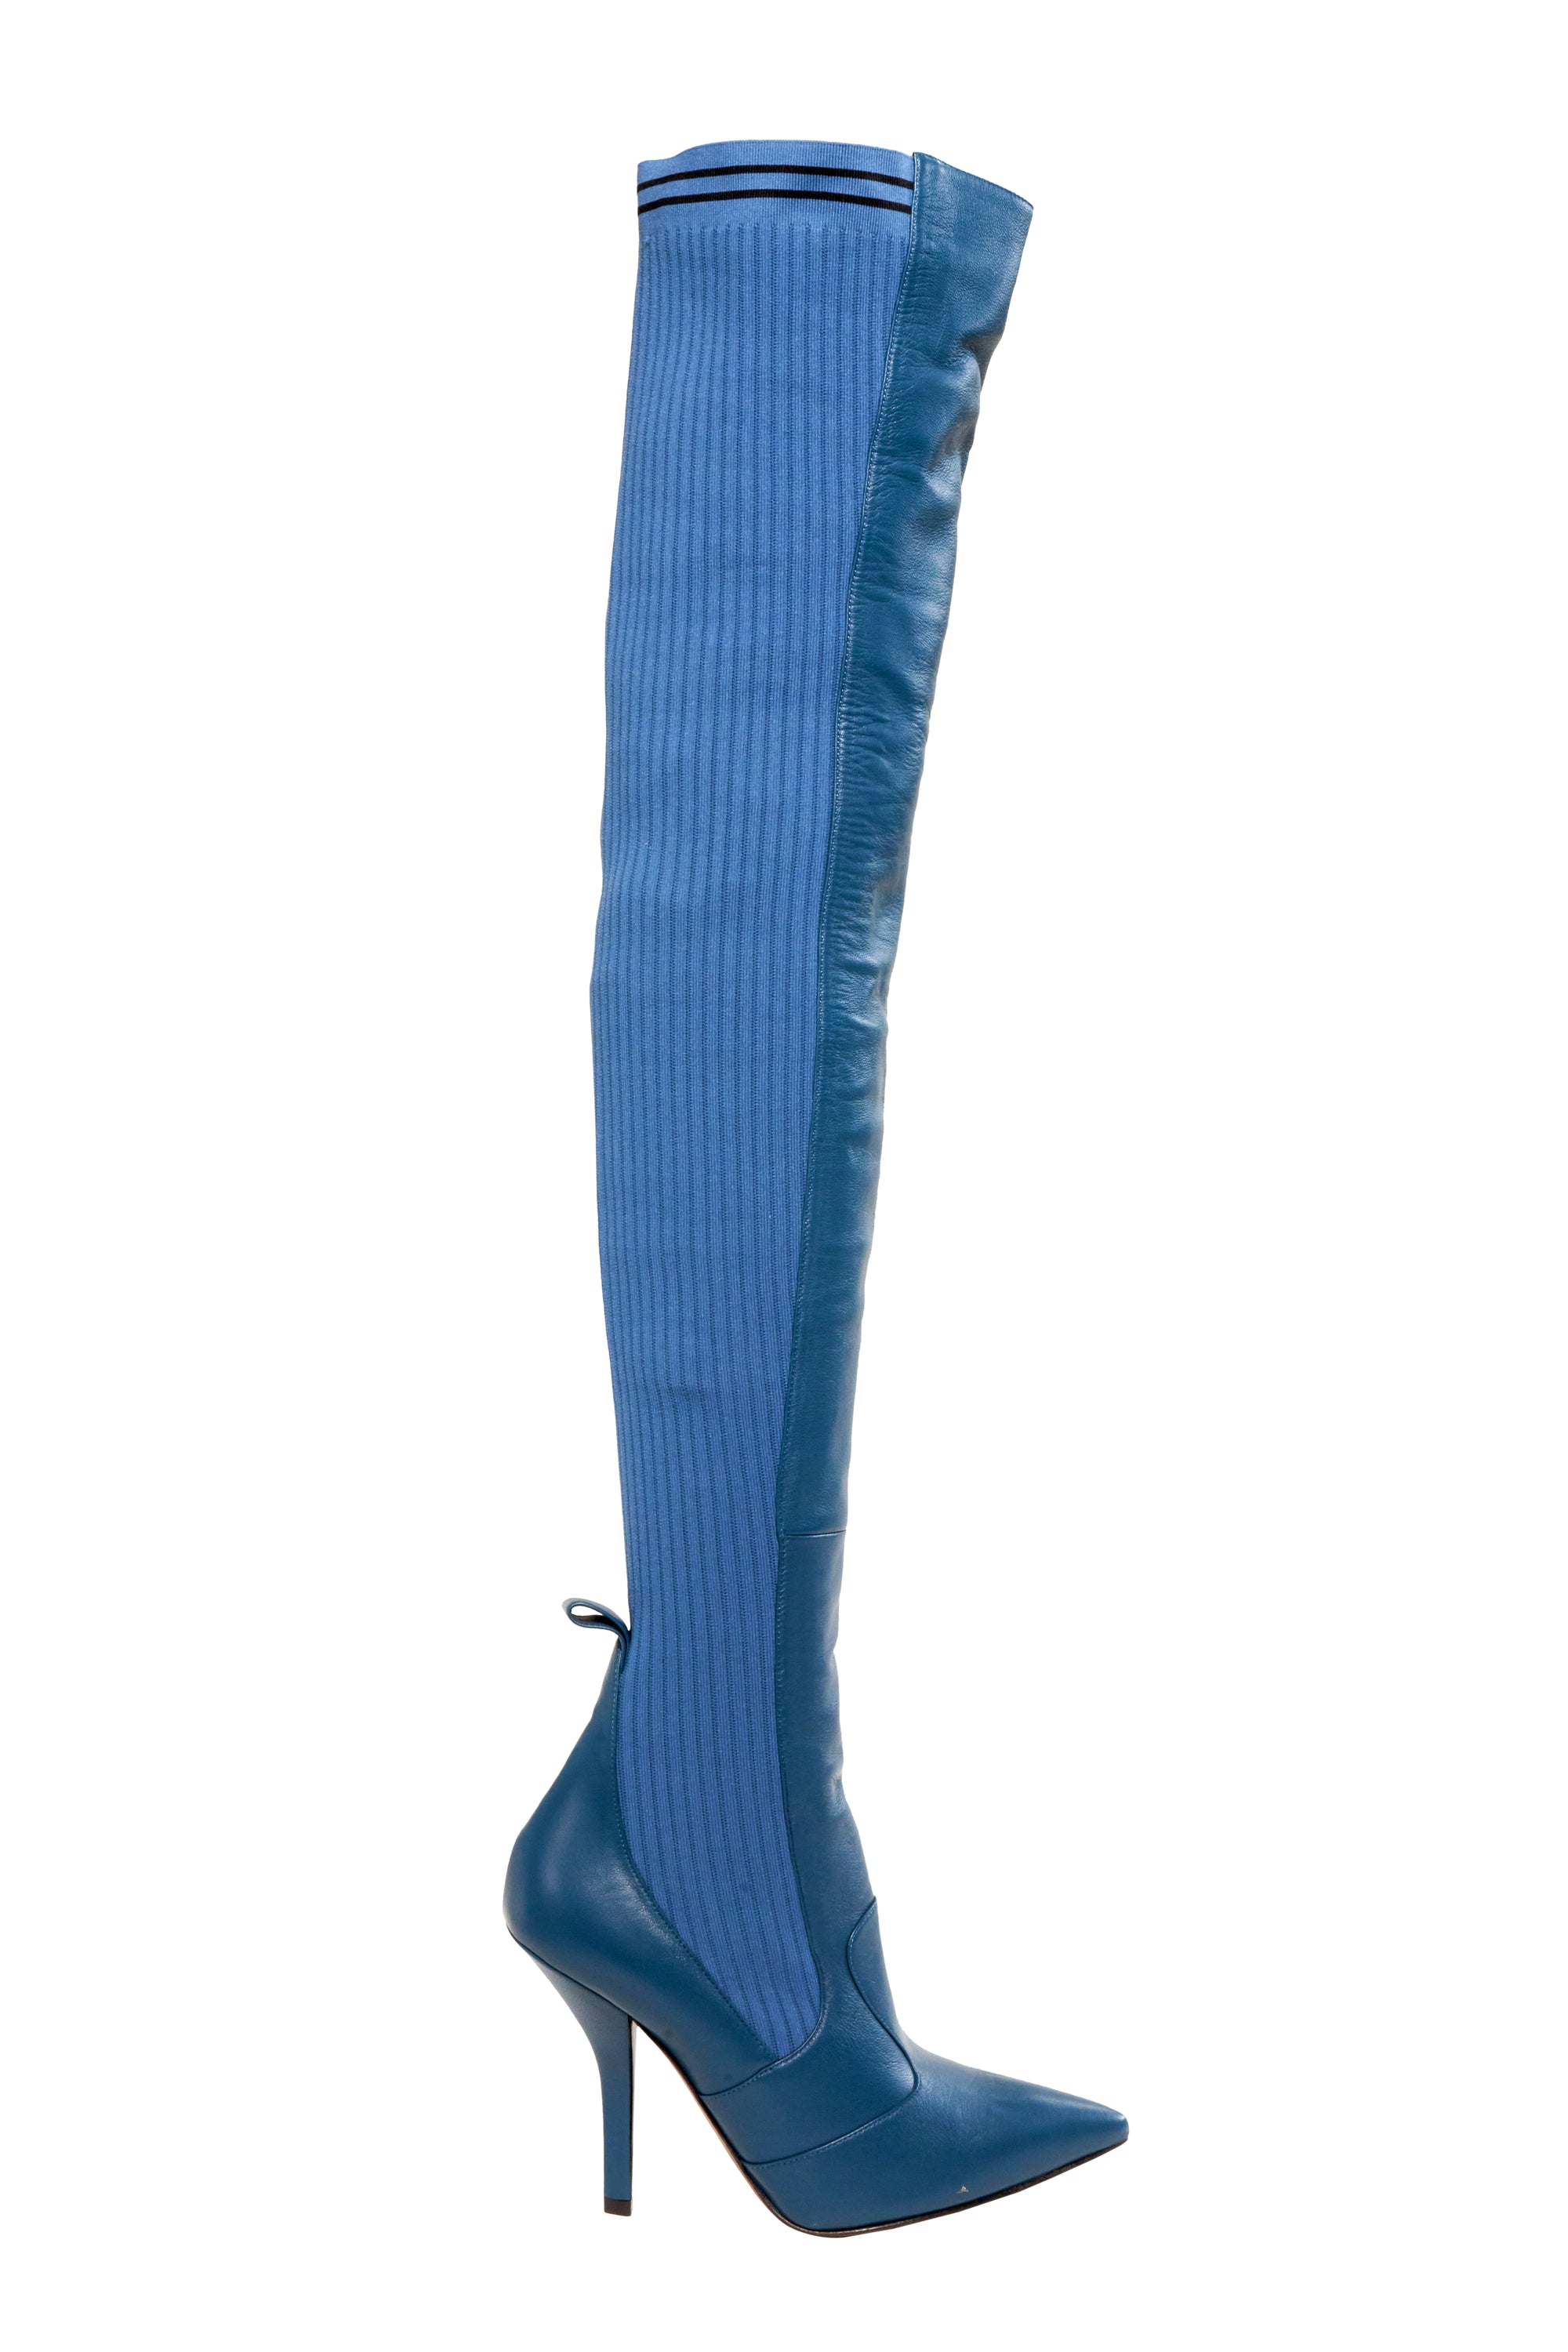 Fendi Medium Blue Sock Boot Over The Knee Heel Size 40